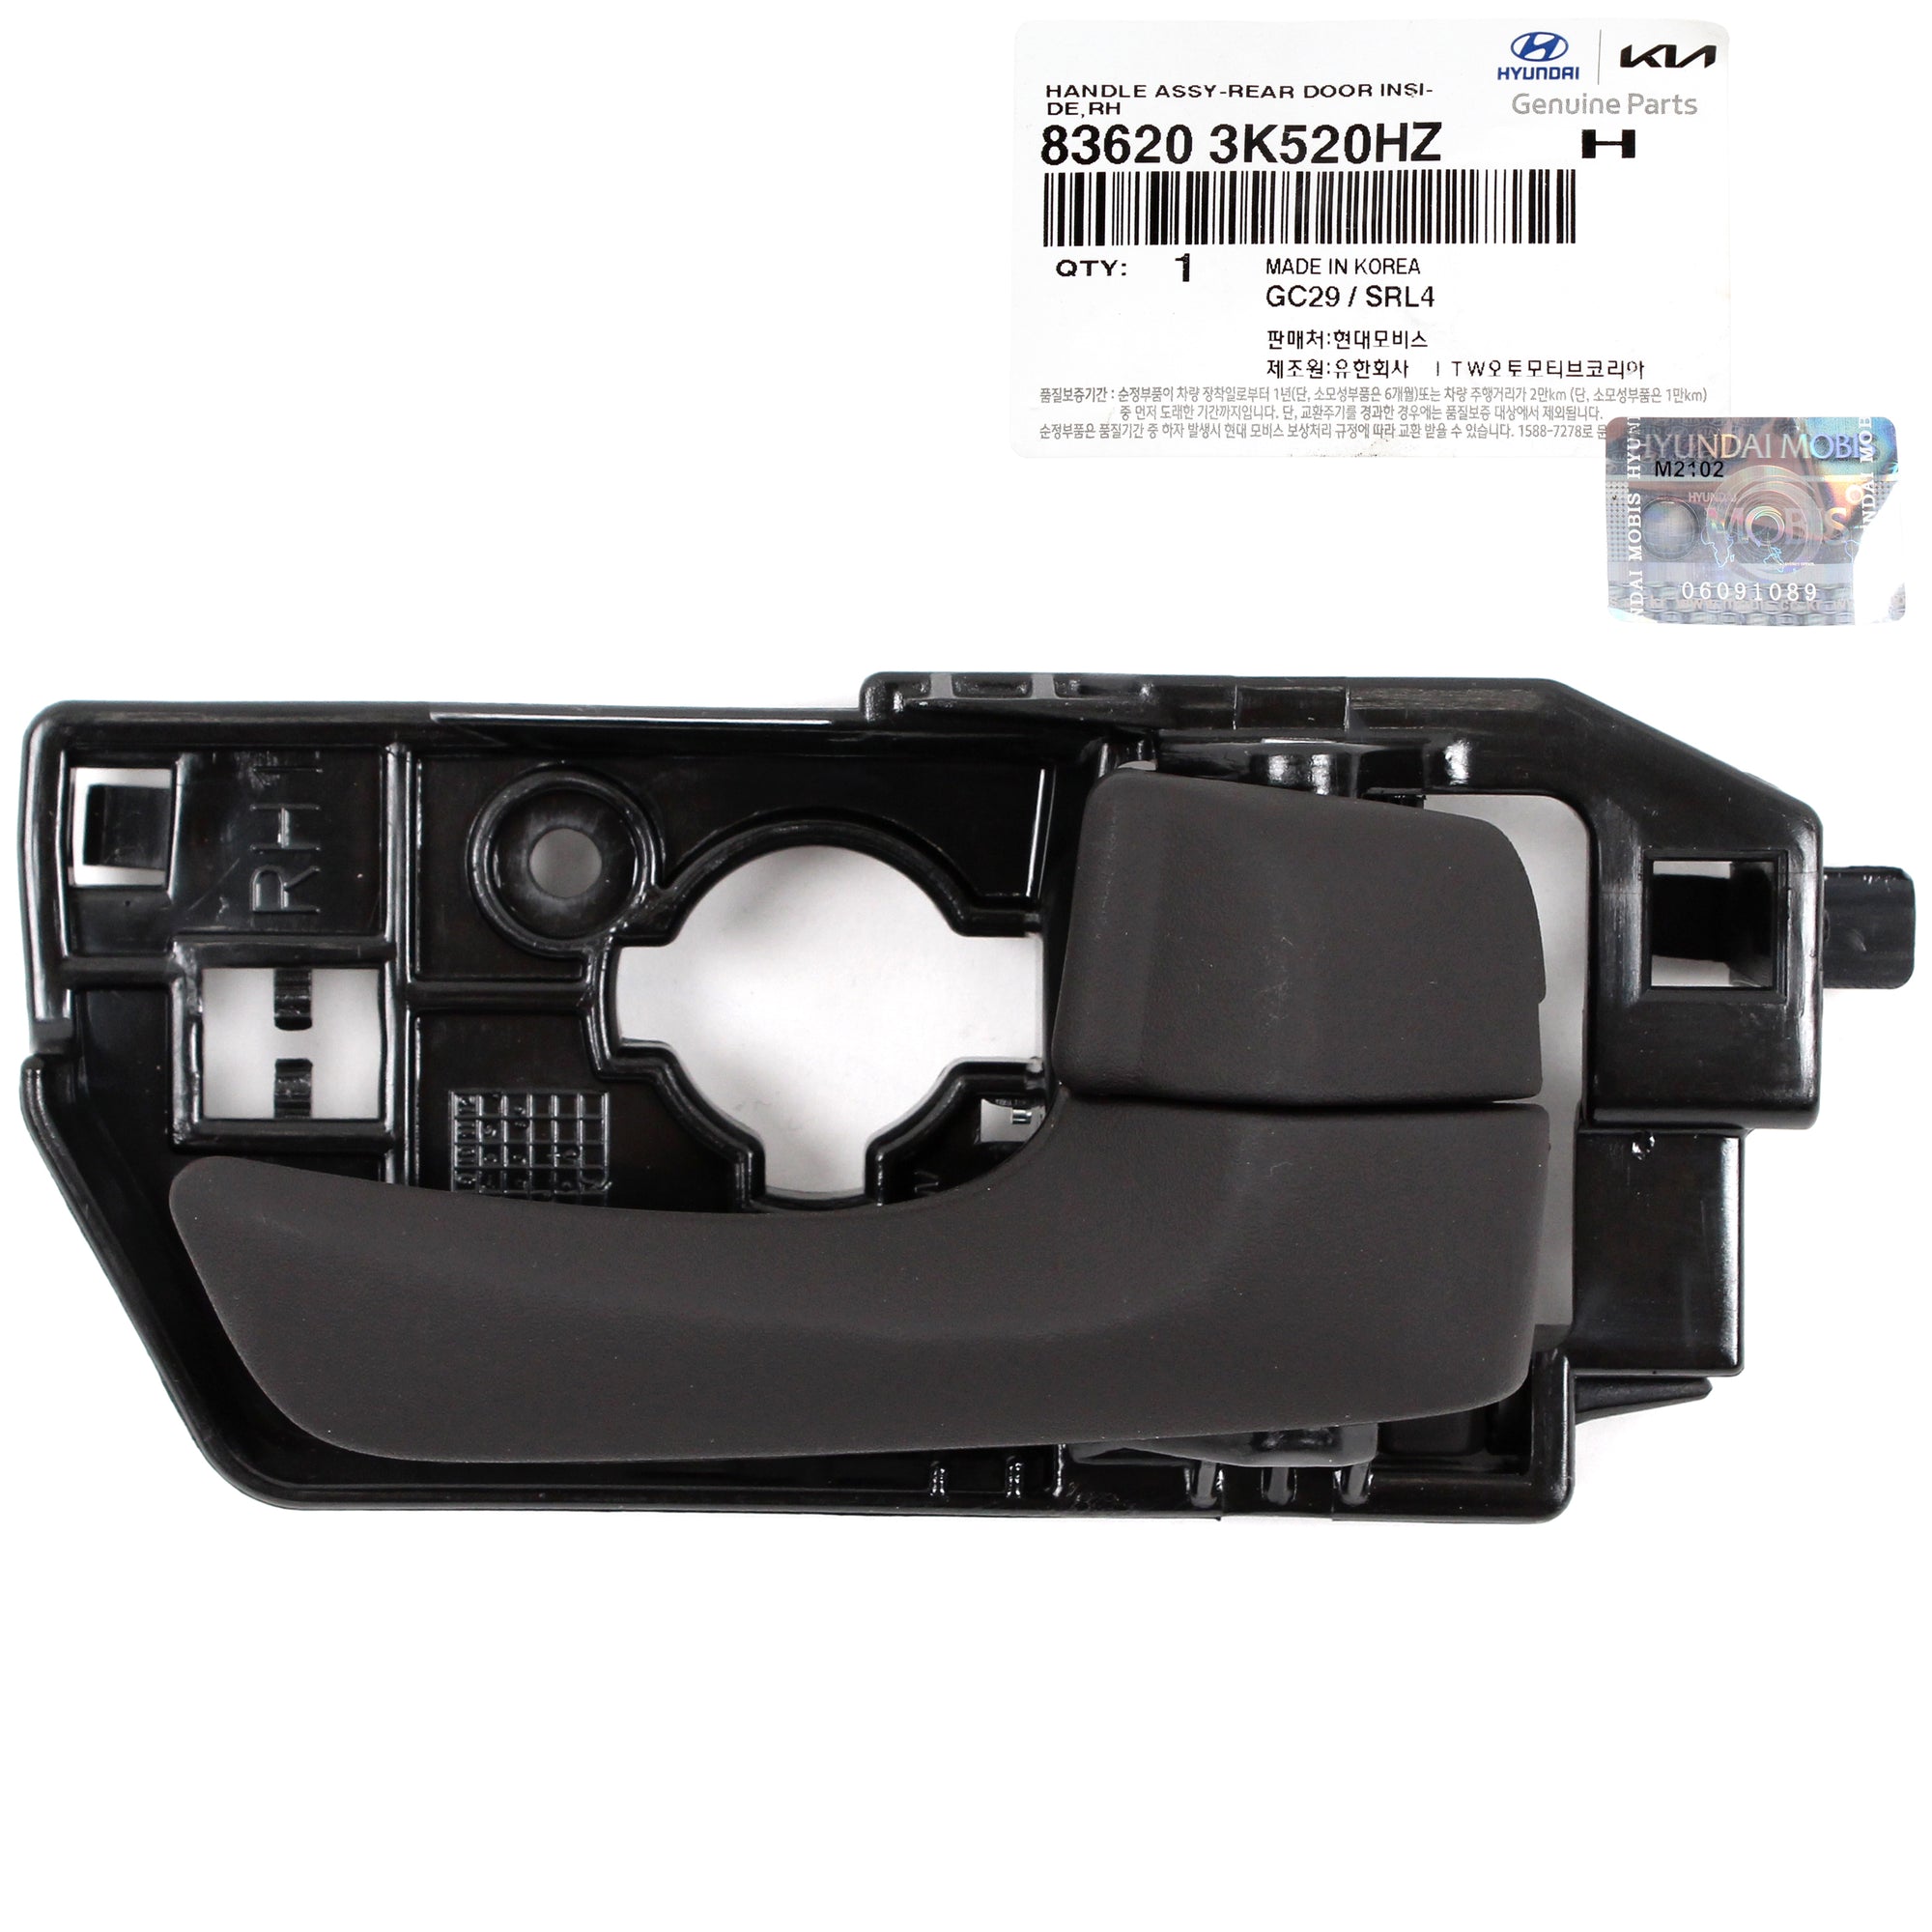 GENUINE Inside Door Handle REAR RIGHT for 08-10 Hyundai Sonata 836203K520HZ